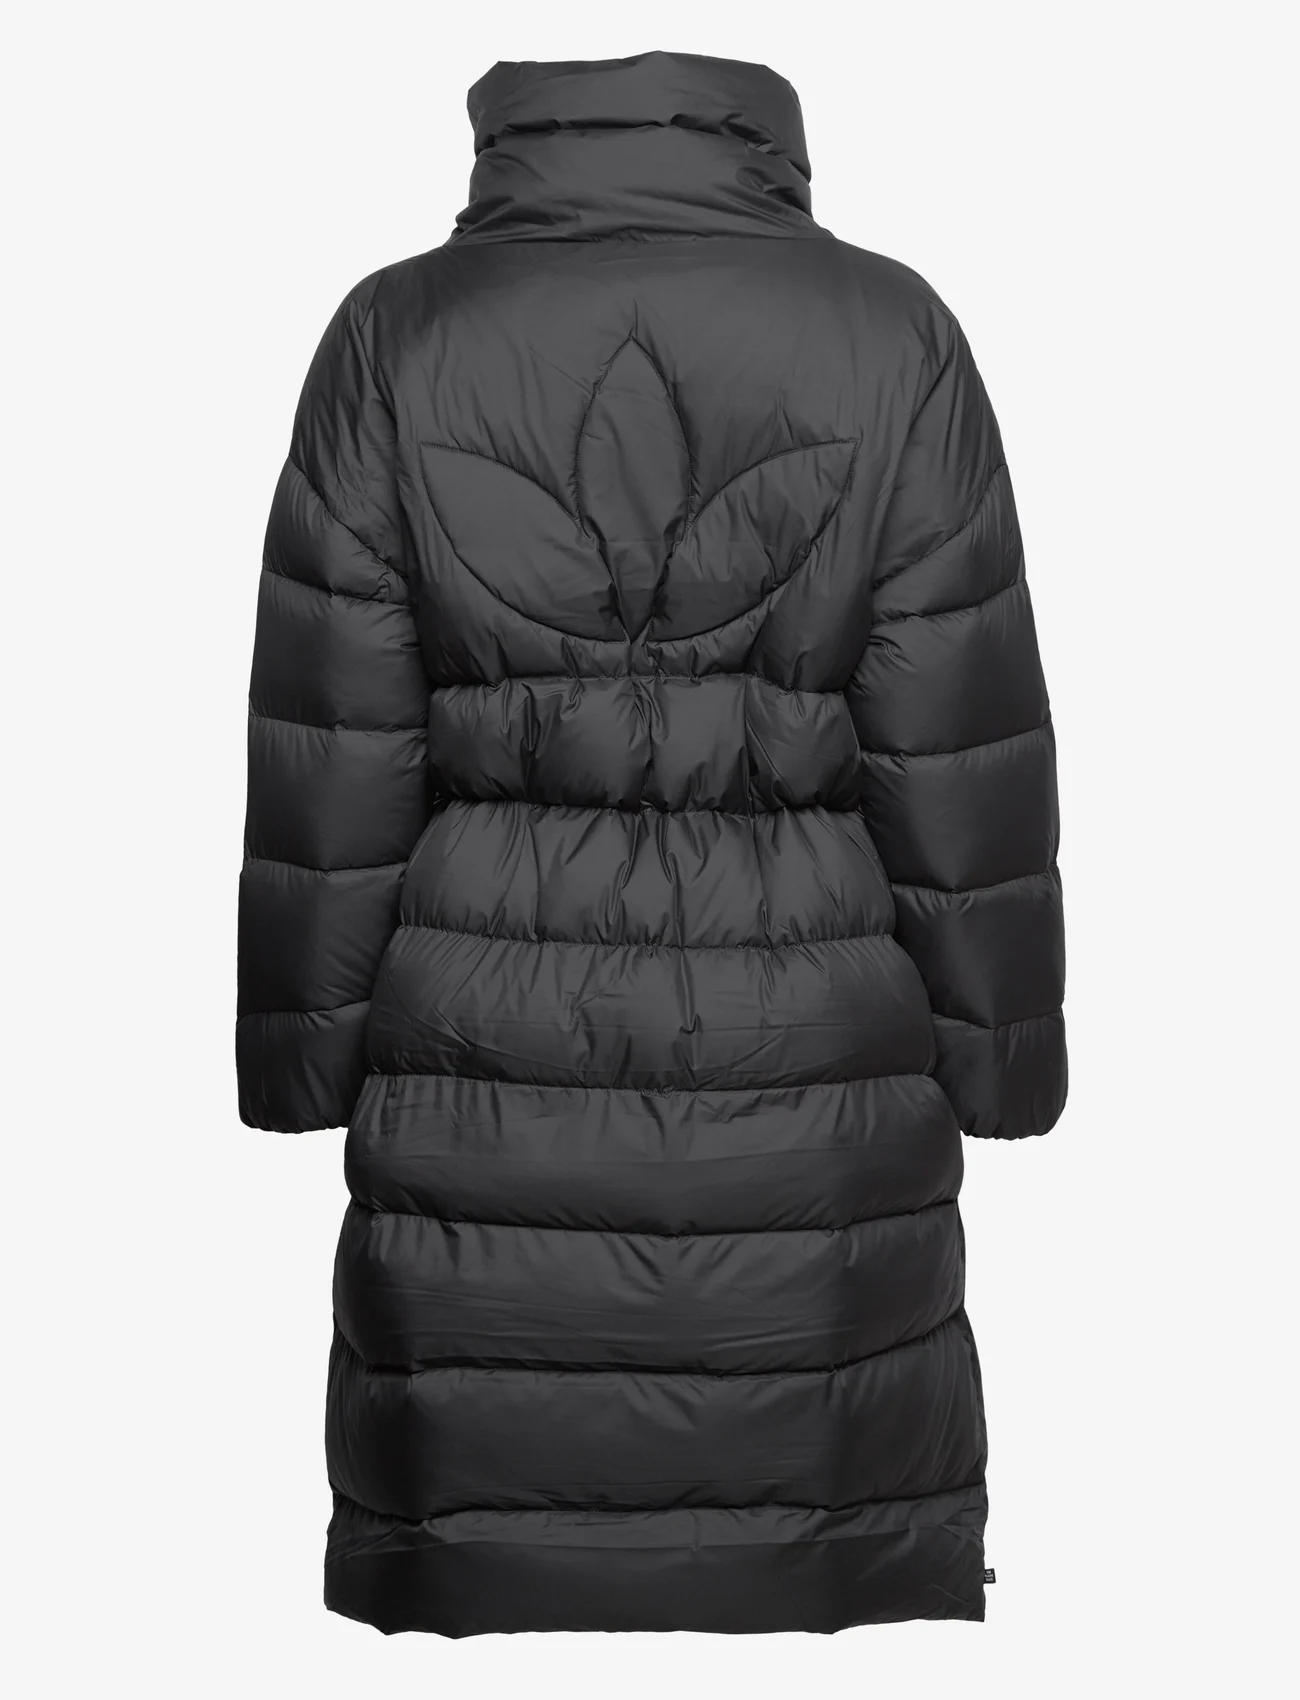 adidas Originals - Fashion Down Jacket - winterjassen - black - 1